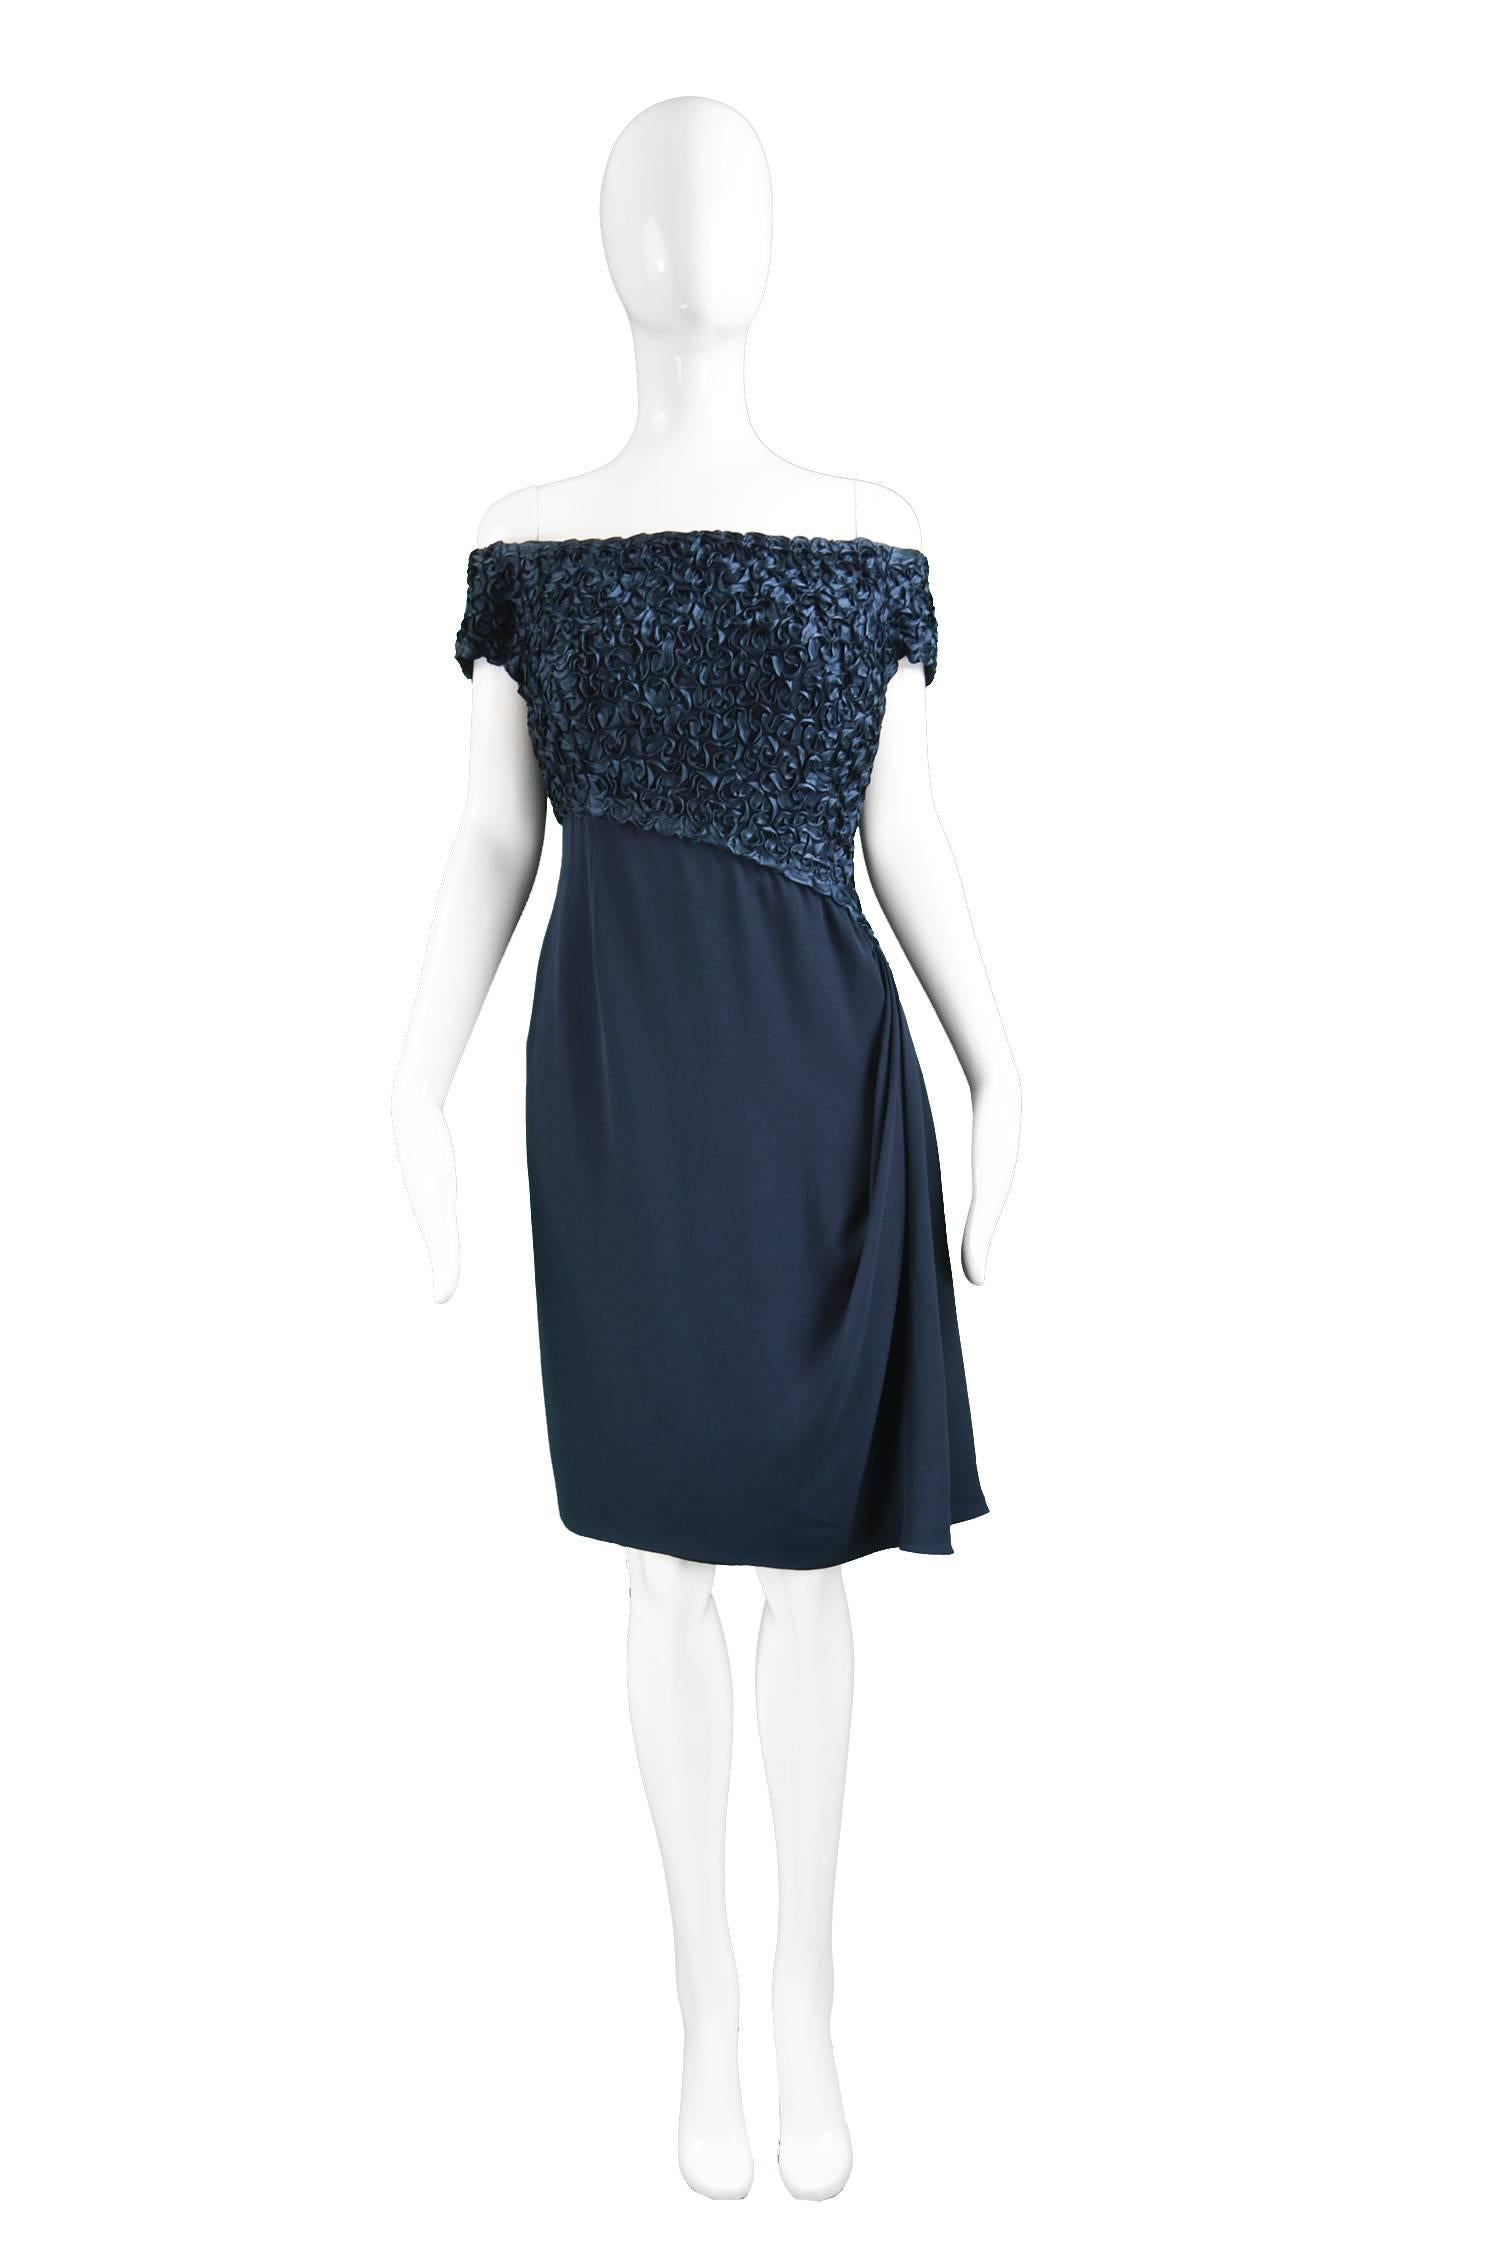 Catherine Walker Navy Blue Silk Ribbonwork & Crepe Couture Evening Dress, 1980s

Estimated Size: UK 8/ US 4/ EU 36. Please check measurements.
Bust - 34” / 86cm
Waist - 26” / 66cm
Hips - 38” / 96cm
Length (Bust to Hem) - 30” / 76cm
 
Condition: